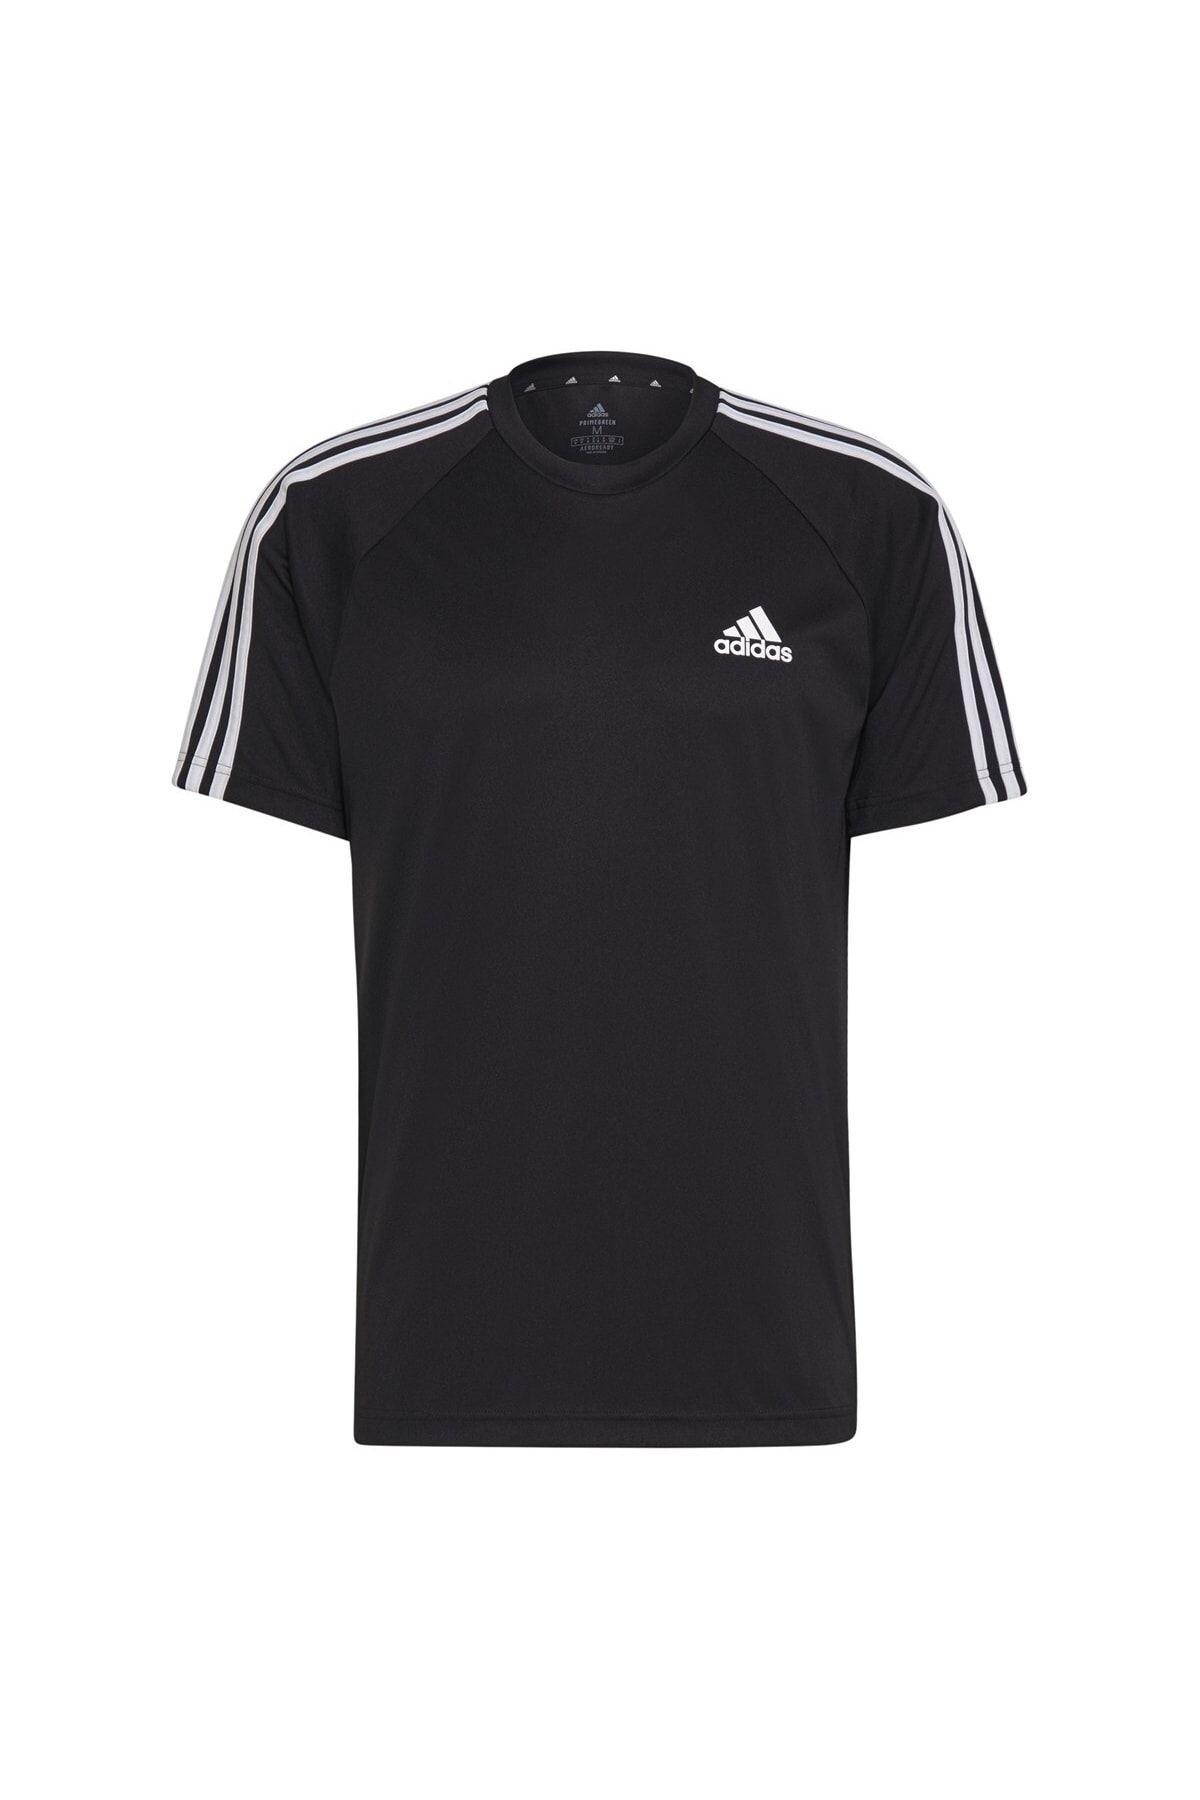 - Black Sports Trendyol adidas - T-Shirt